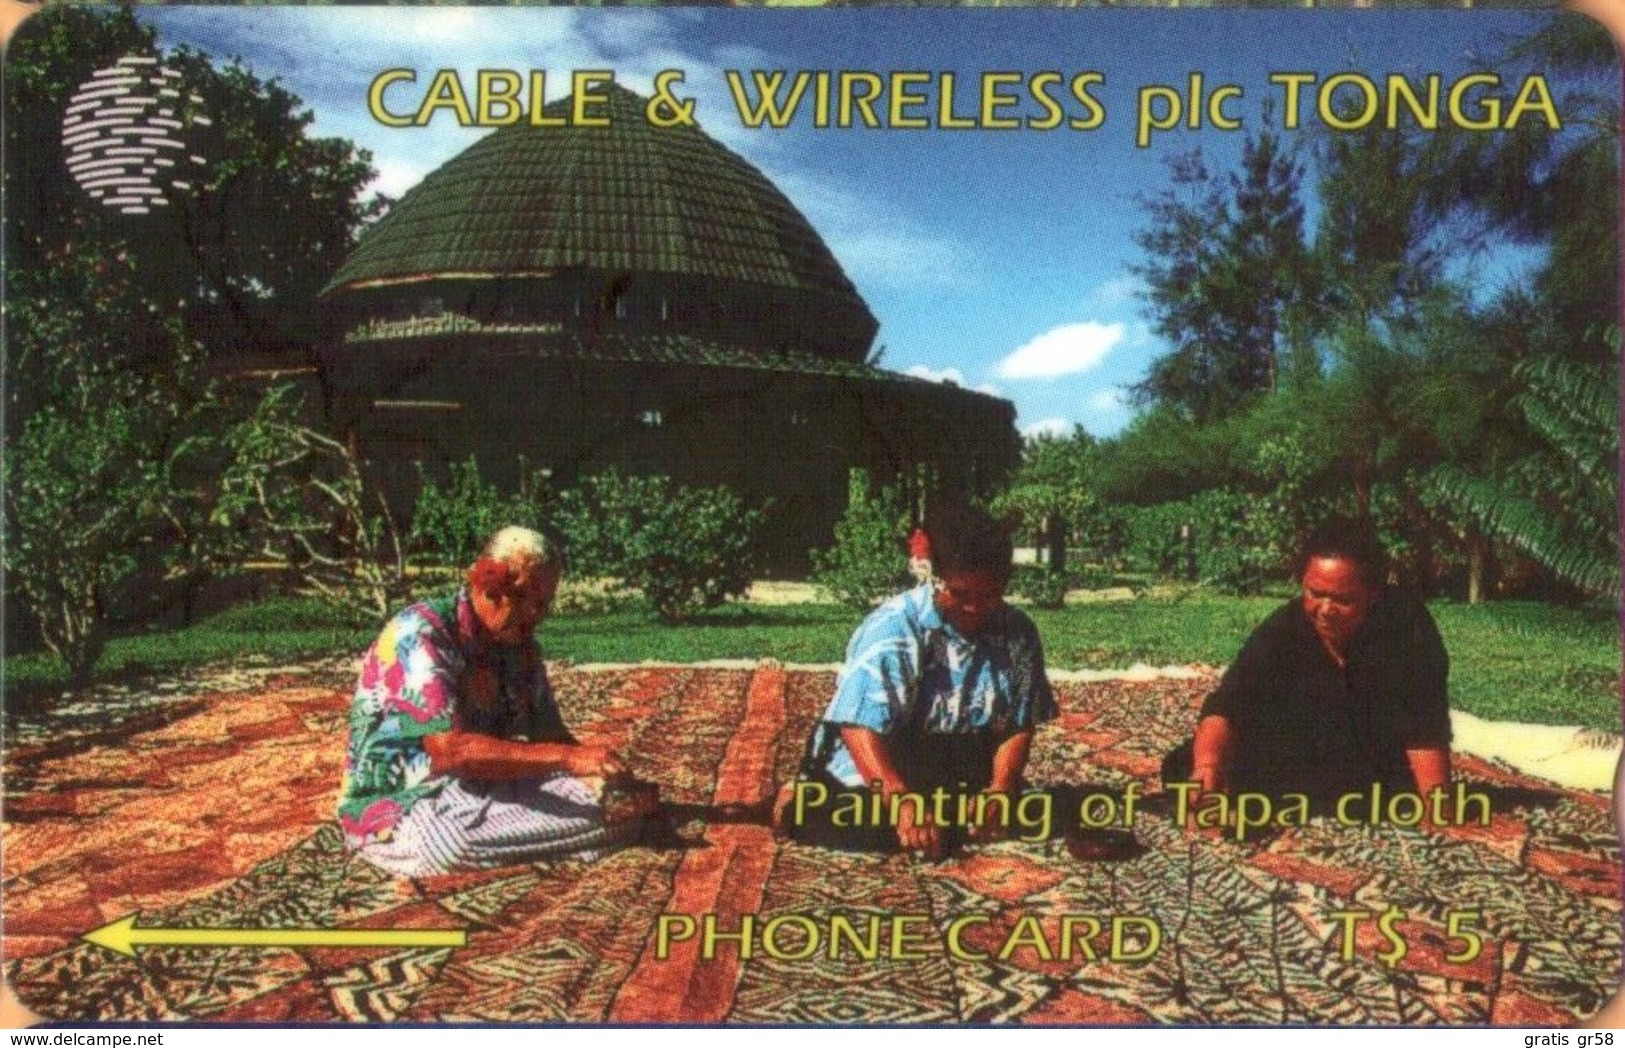 Tonga - TON-01, 1CTGA, Painting Of Tapa Cloth, Palm-trees, Suits And Costumes, 5,000ex, 1994, Used - Tonga